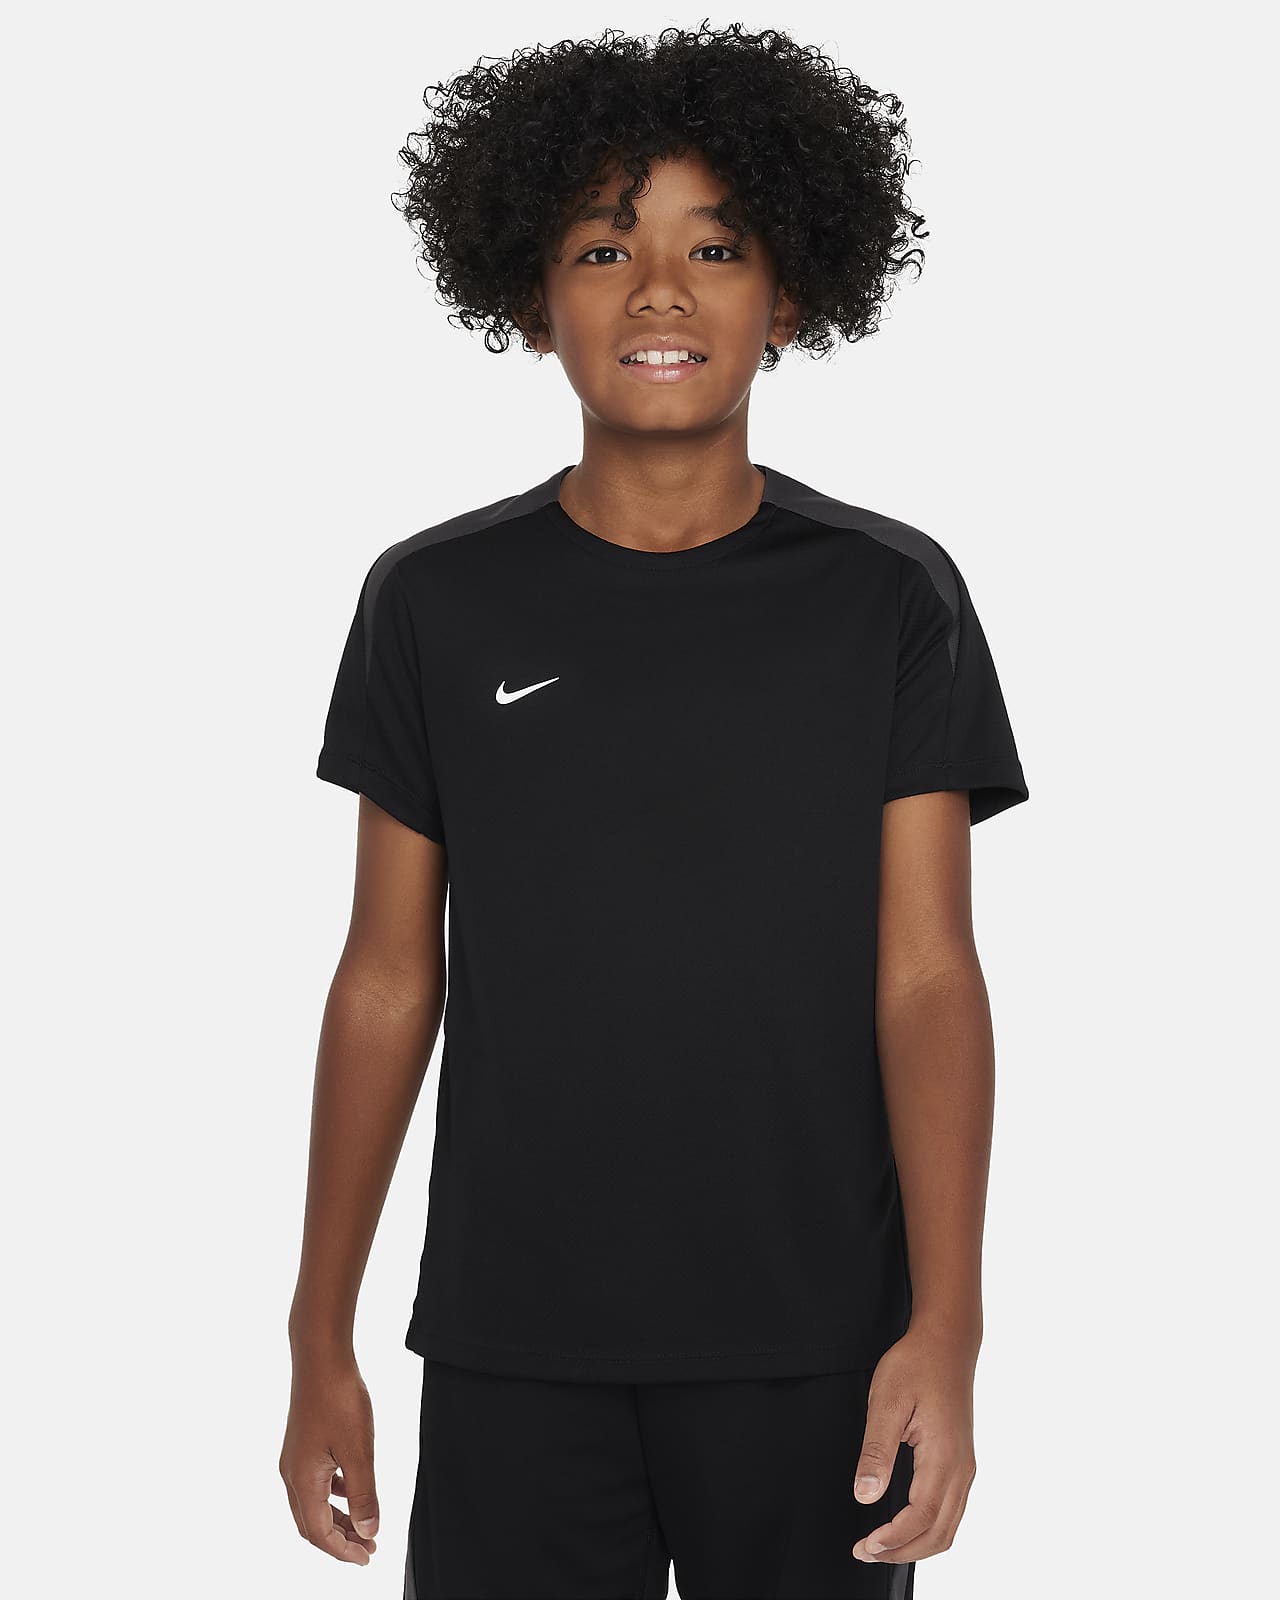 Nike Dri-FIT Strike rövid ujjú futballfelső nagyobb gyerekeknek